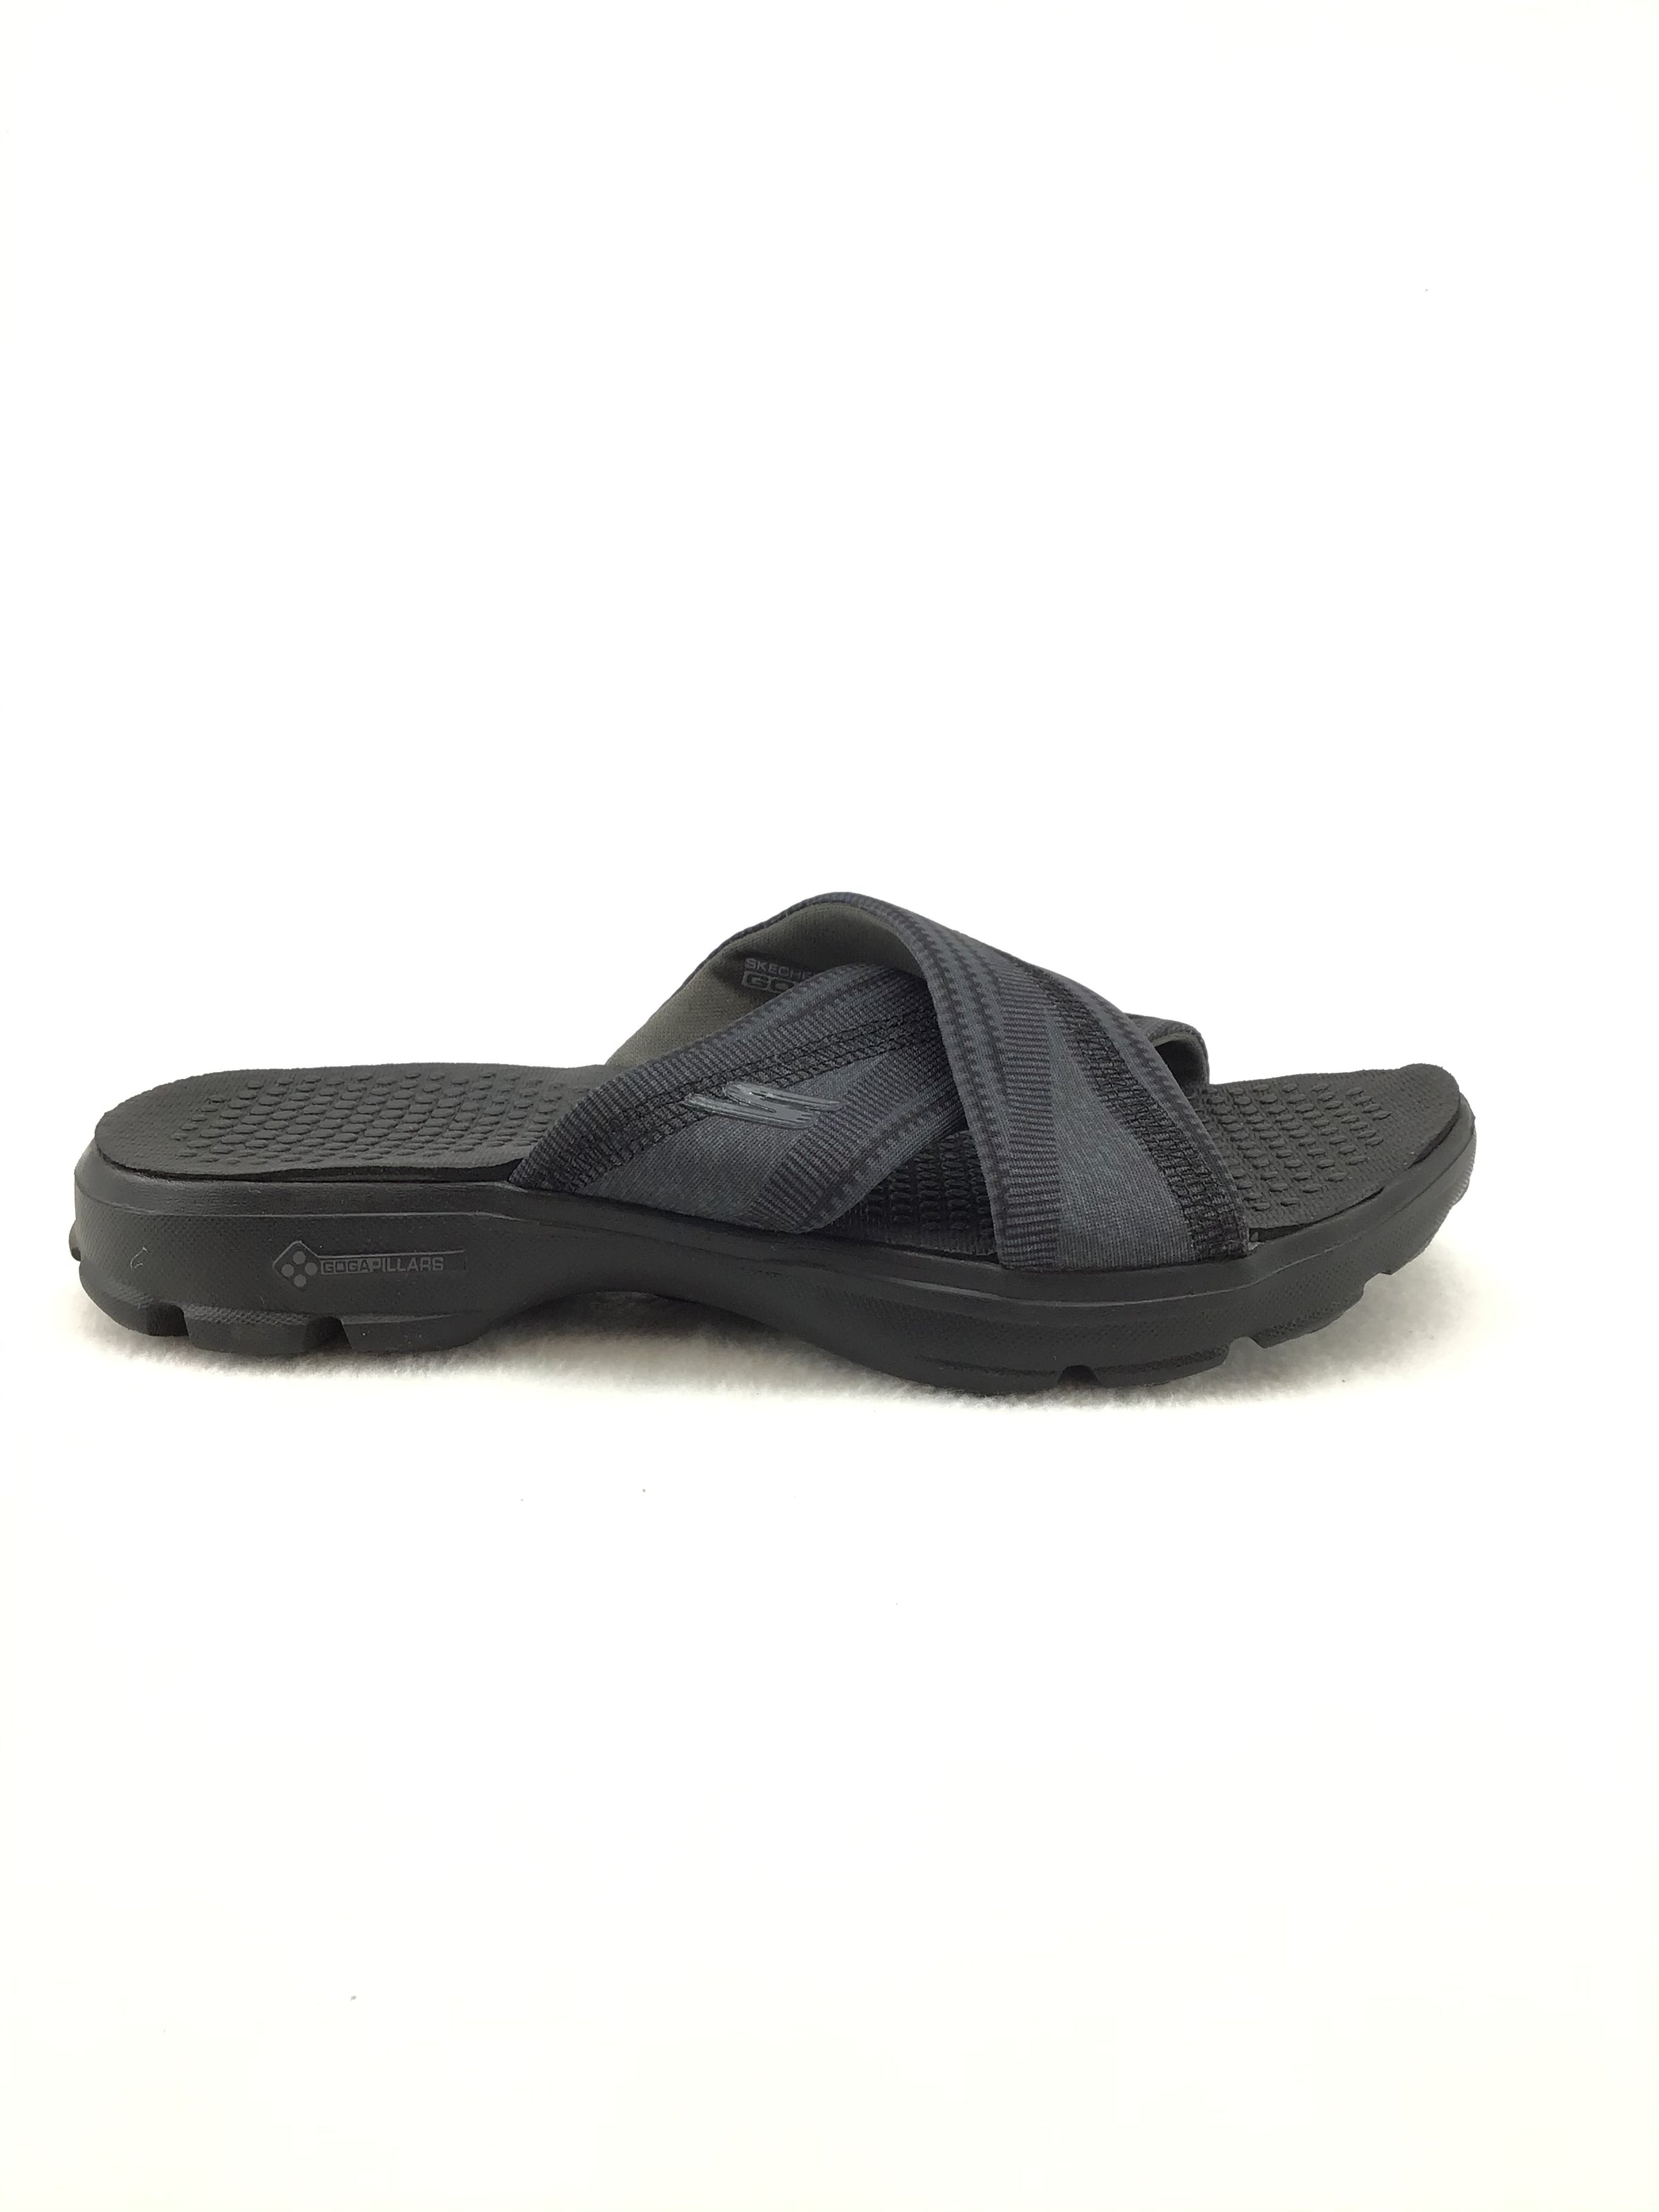 Skechers GoGo Mat Sandals Size 7